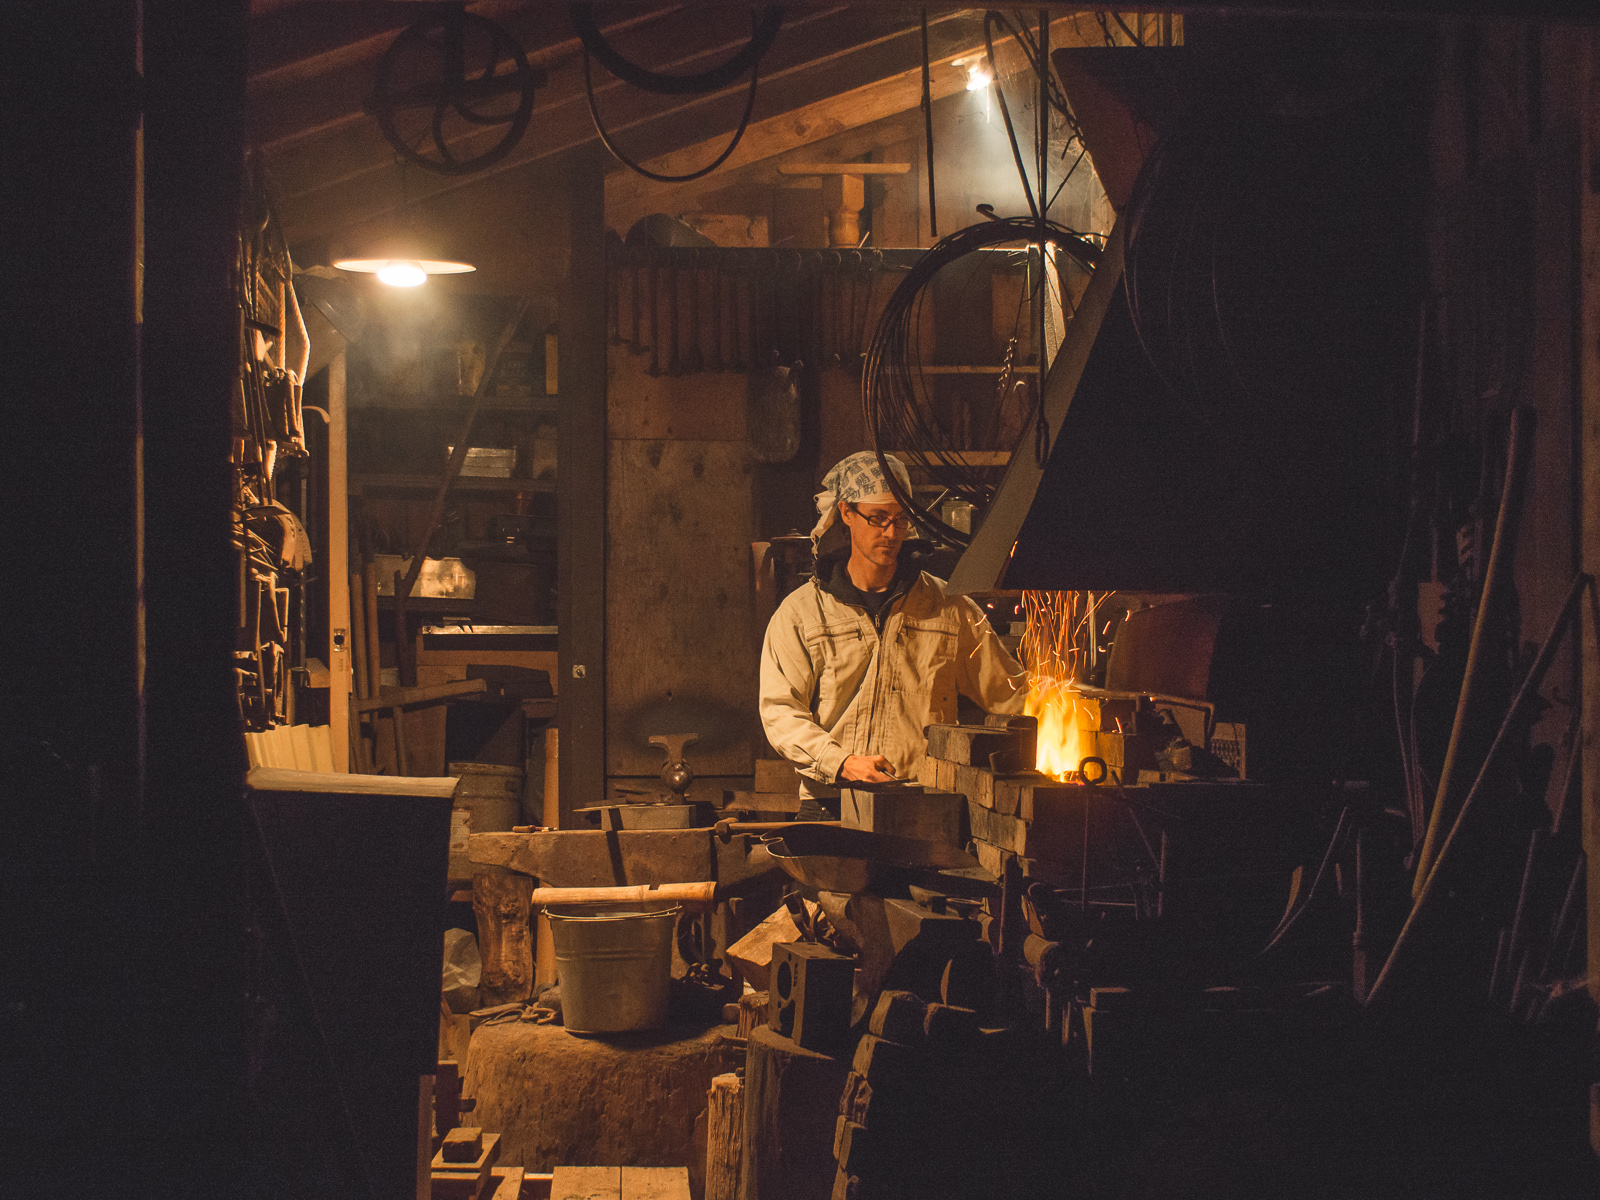 Island Blacksmith: Forge Design, Construction, & Consulting